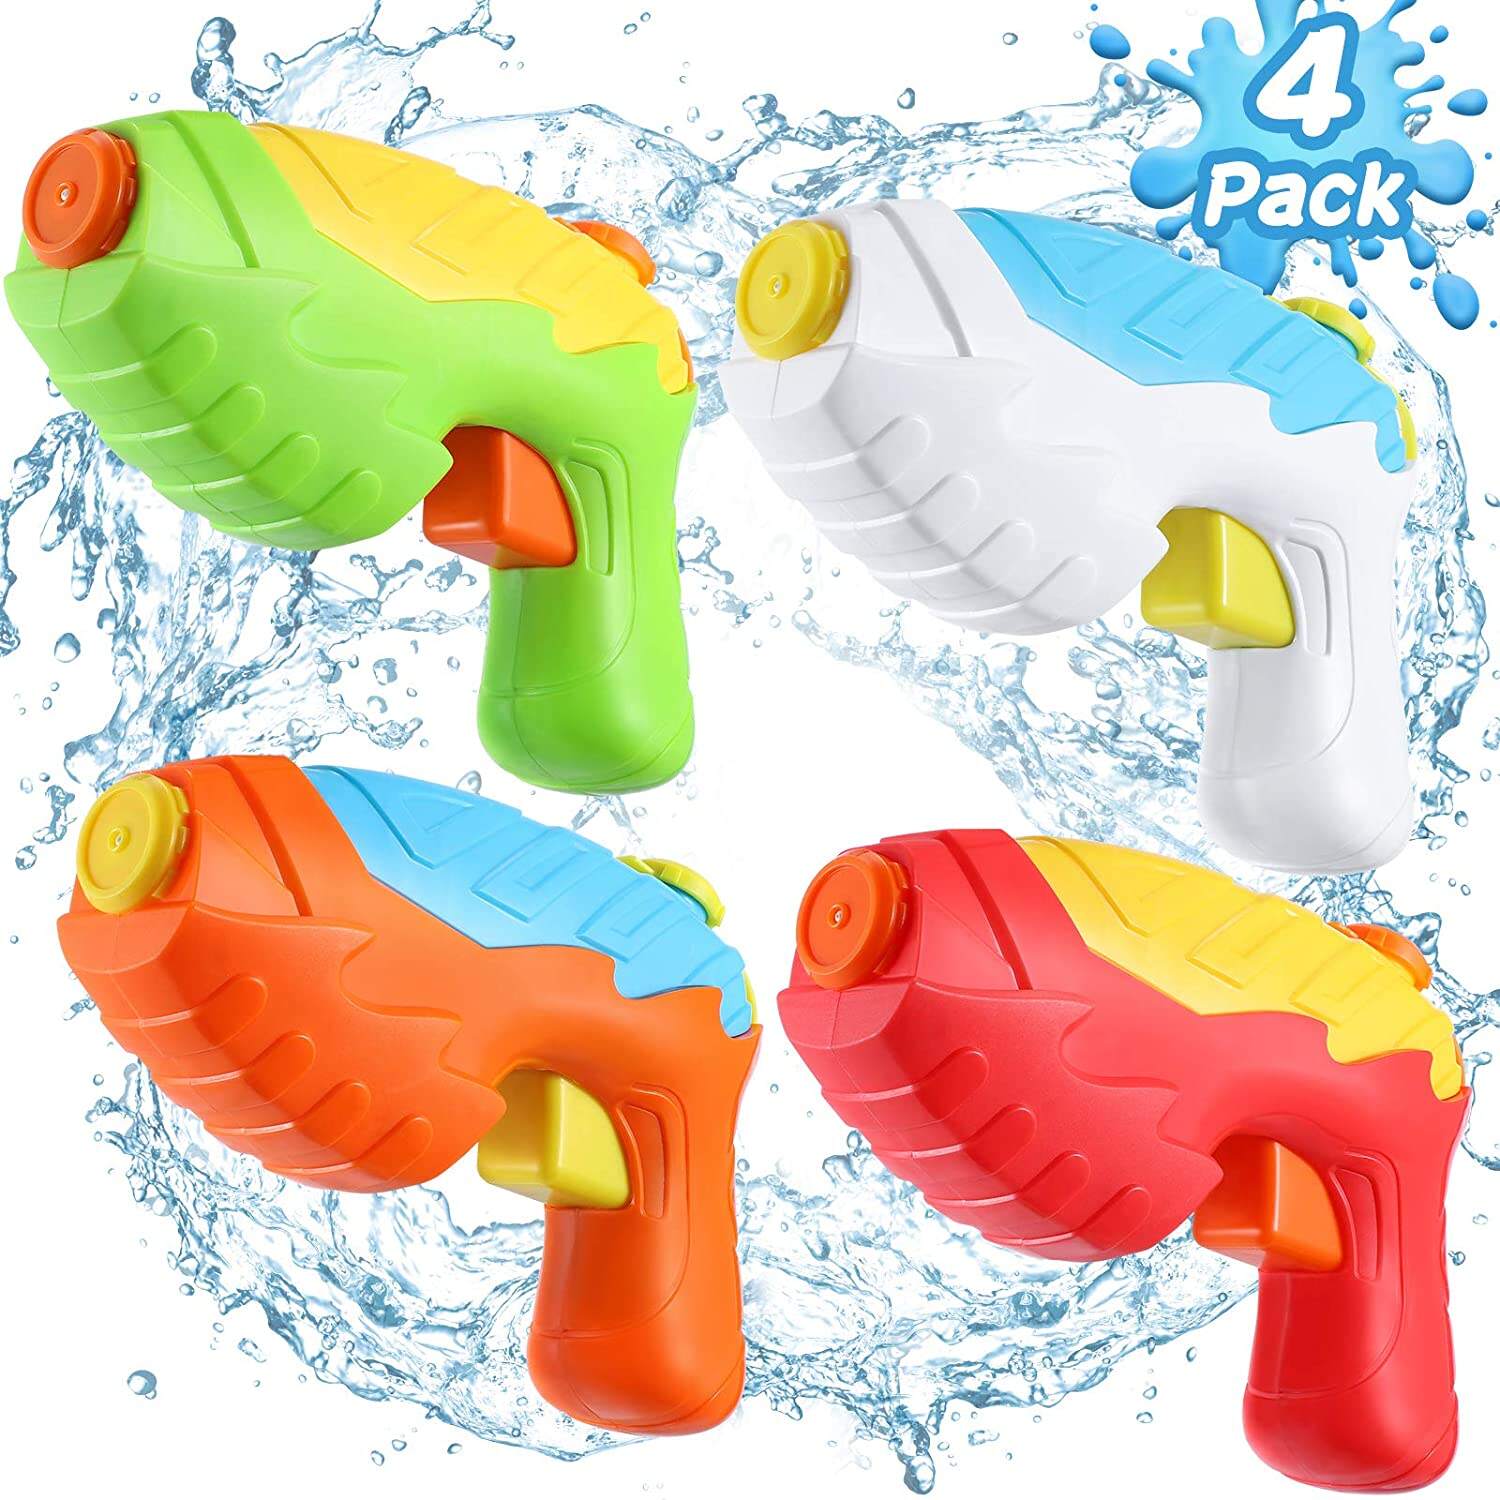 AQUA QUEST - Colorful 4 Pack Water Gun Summer Outdoor Super Games Water Pistol for Kids